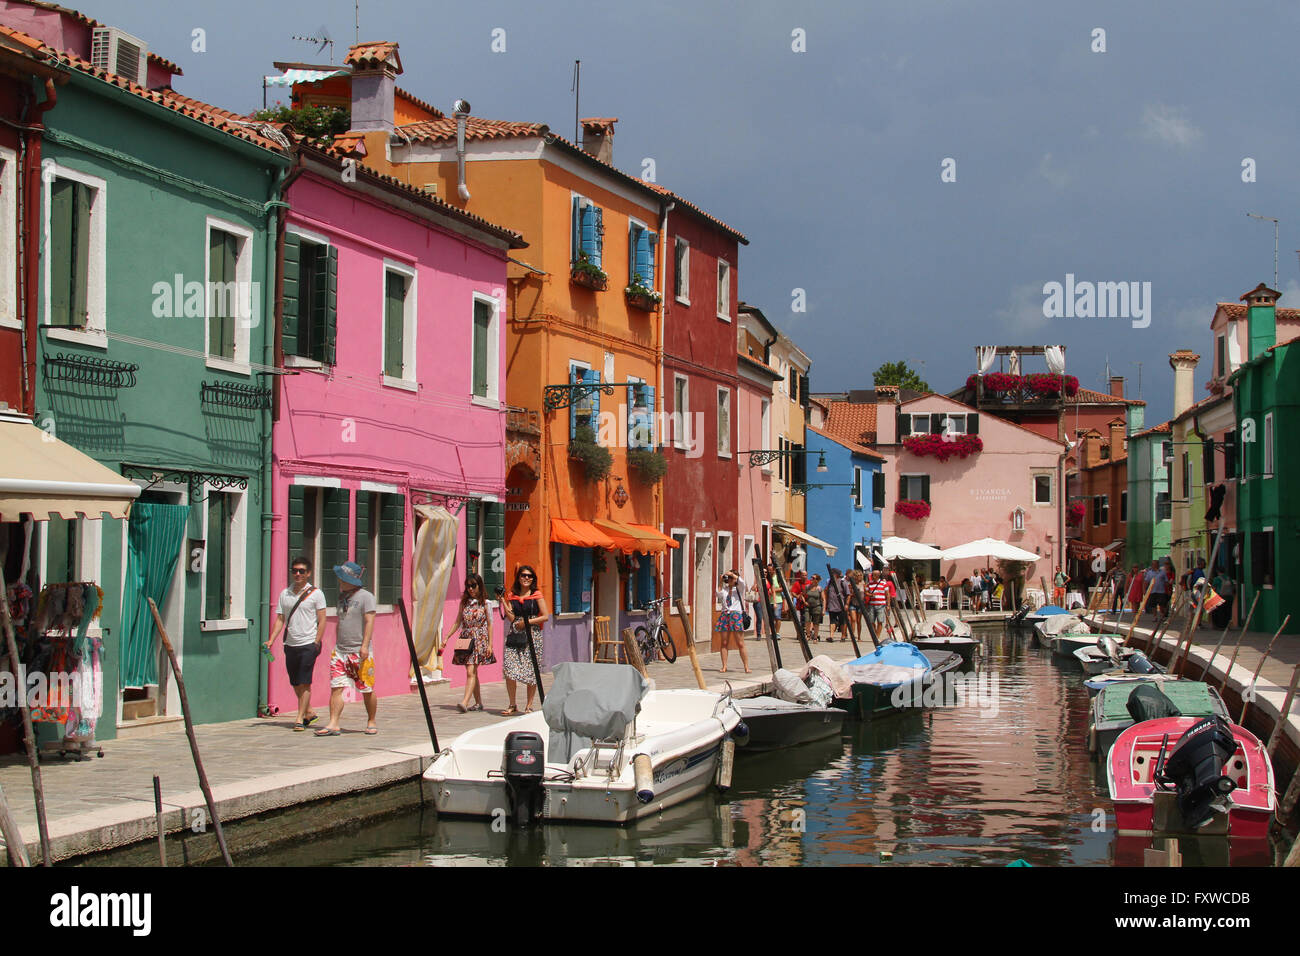 FARBIGE Häuser & Boote am Kanal BURANO Venedig Italien 3. August 2014 Stockfoto